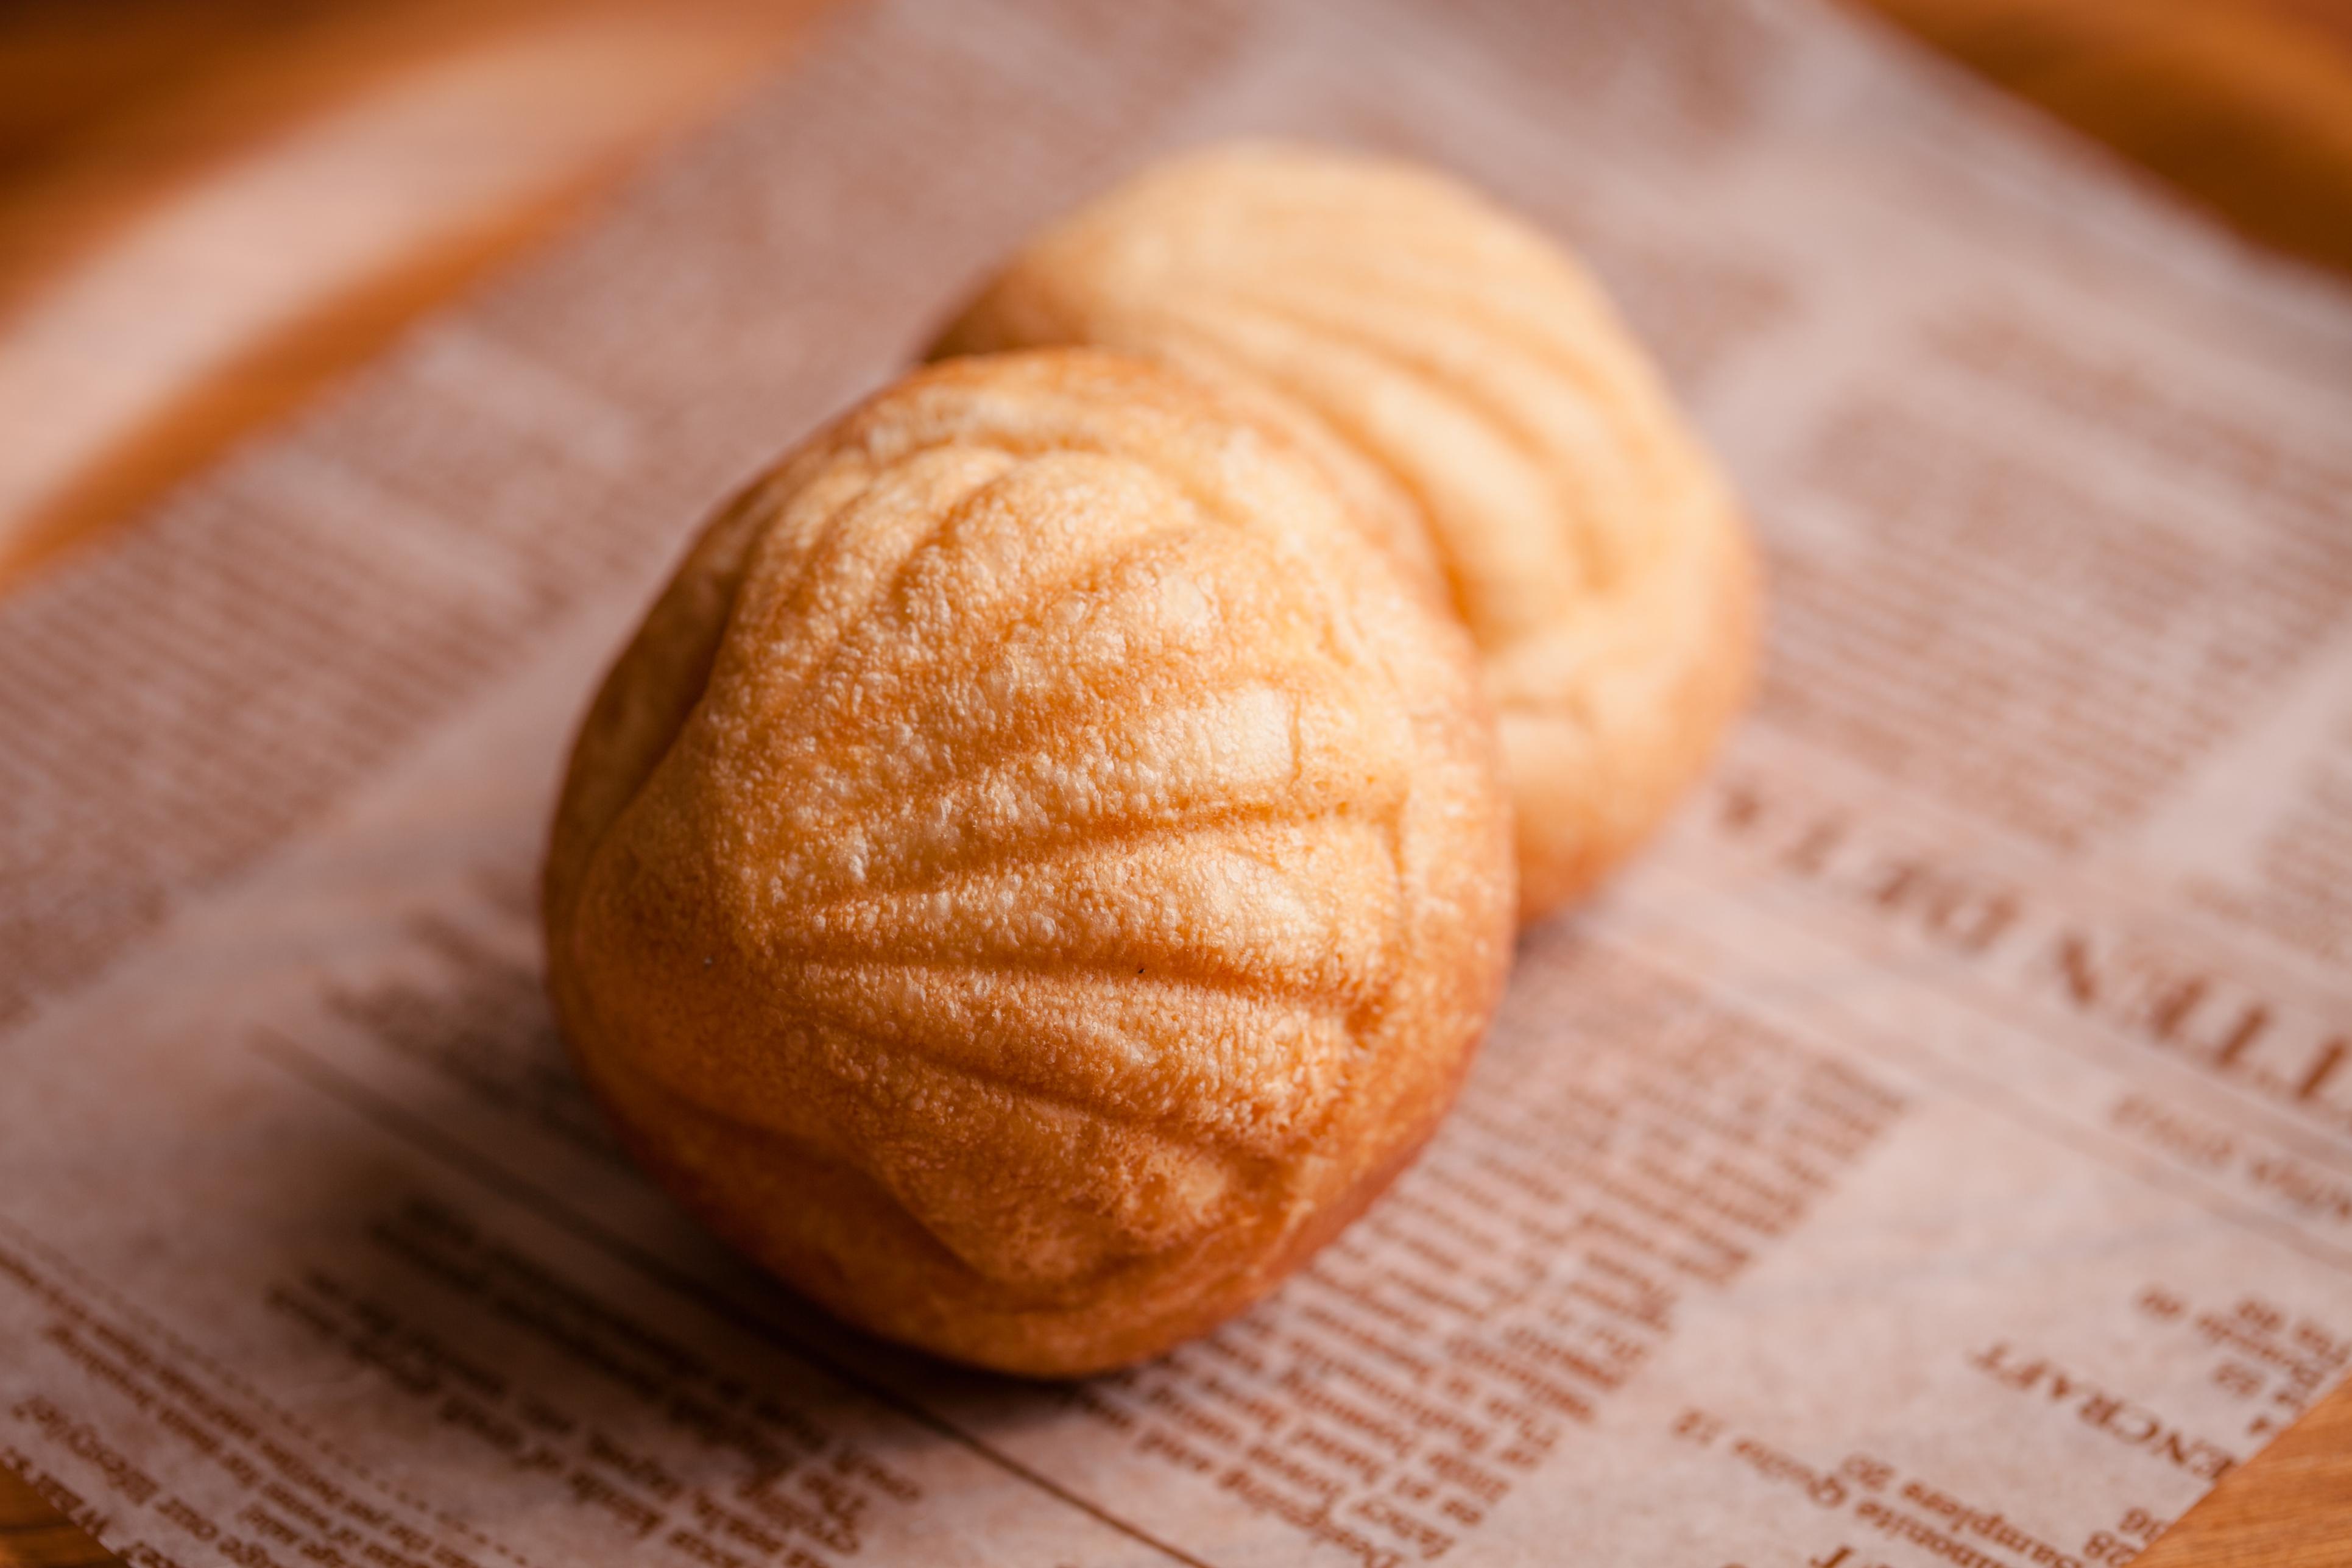 Pâtissière: sweet bread overflowing with custard cream